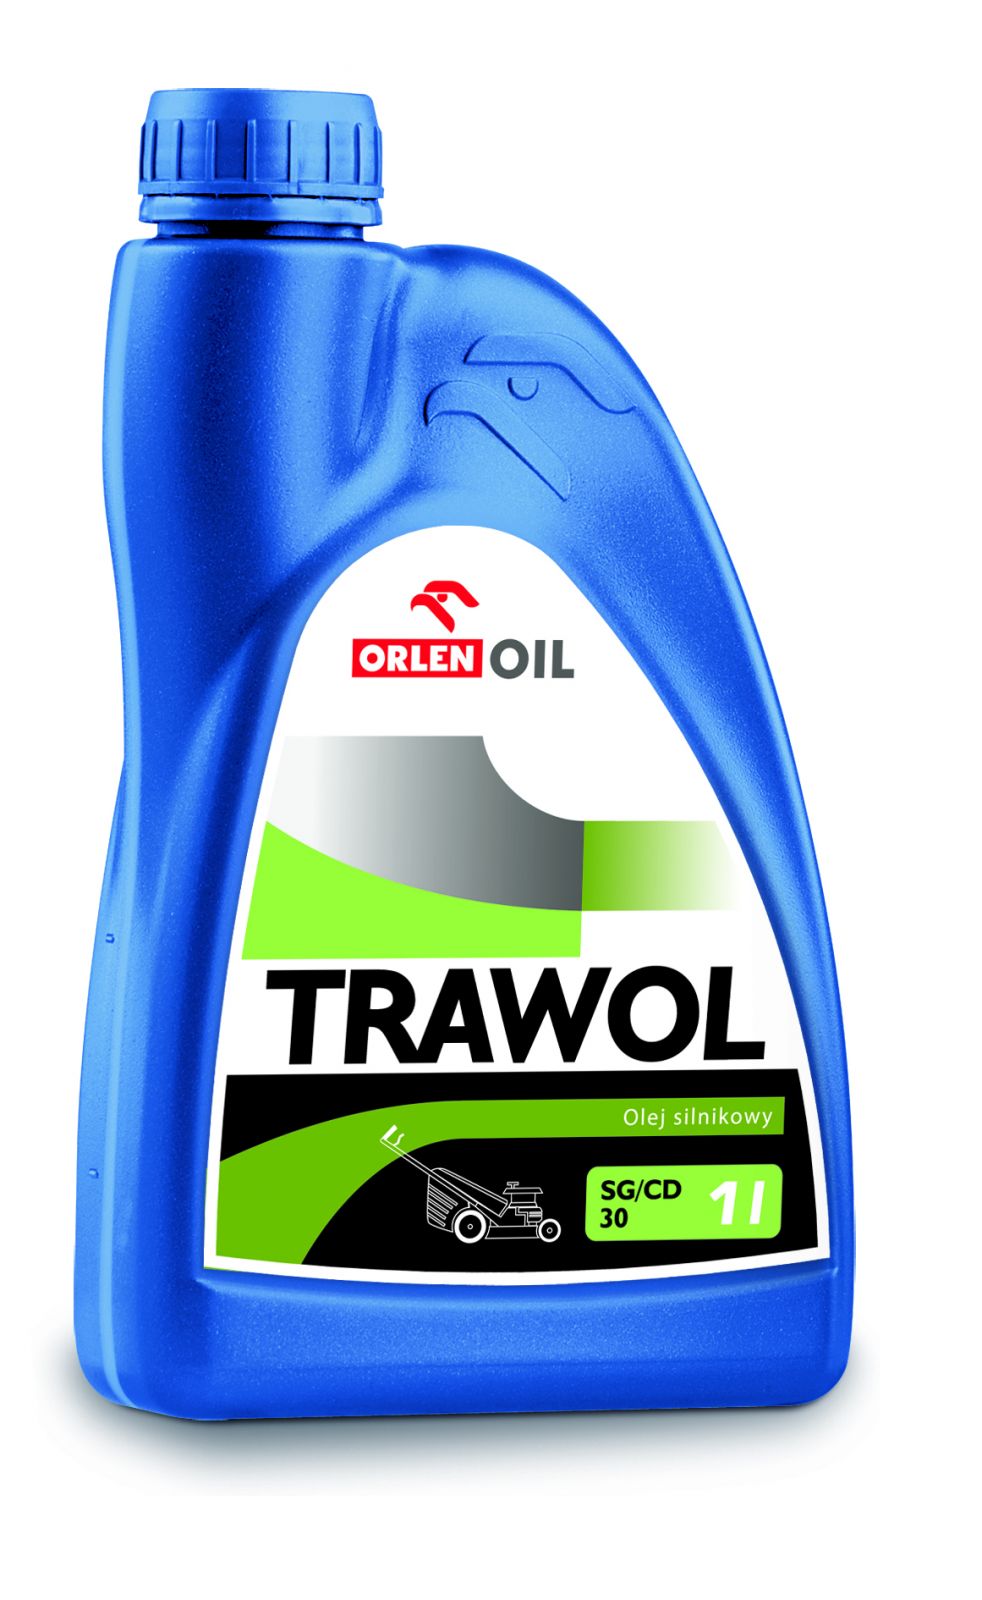 ORLEN OIL TRAWOL 30 20l